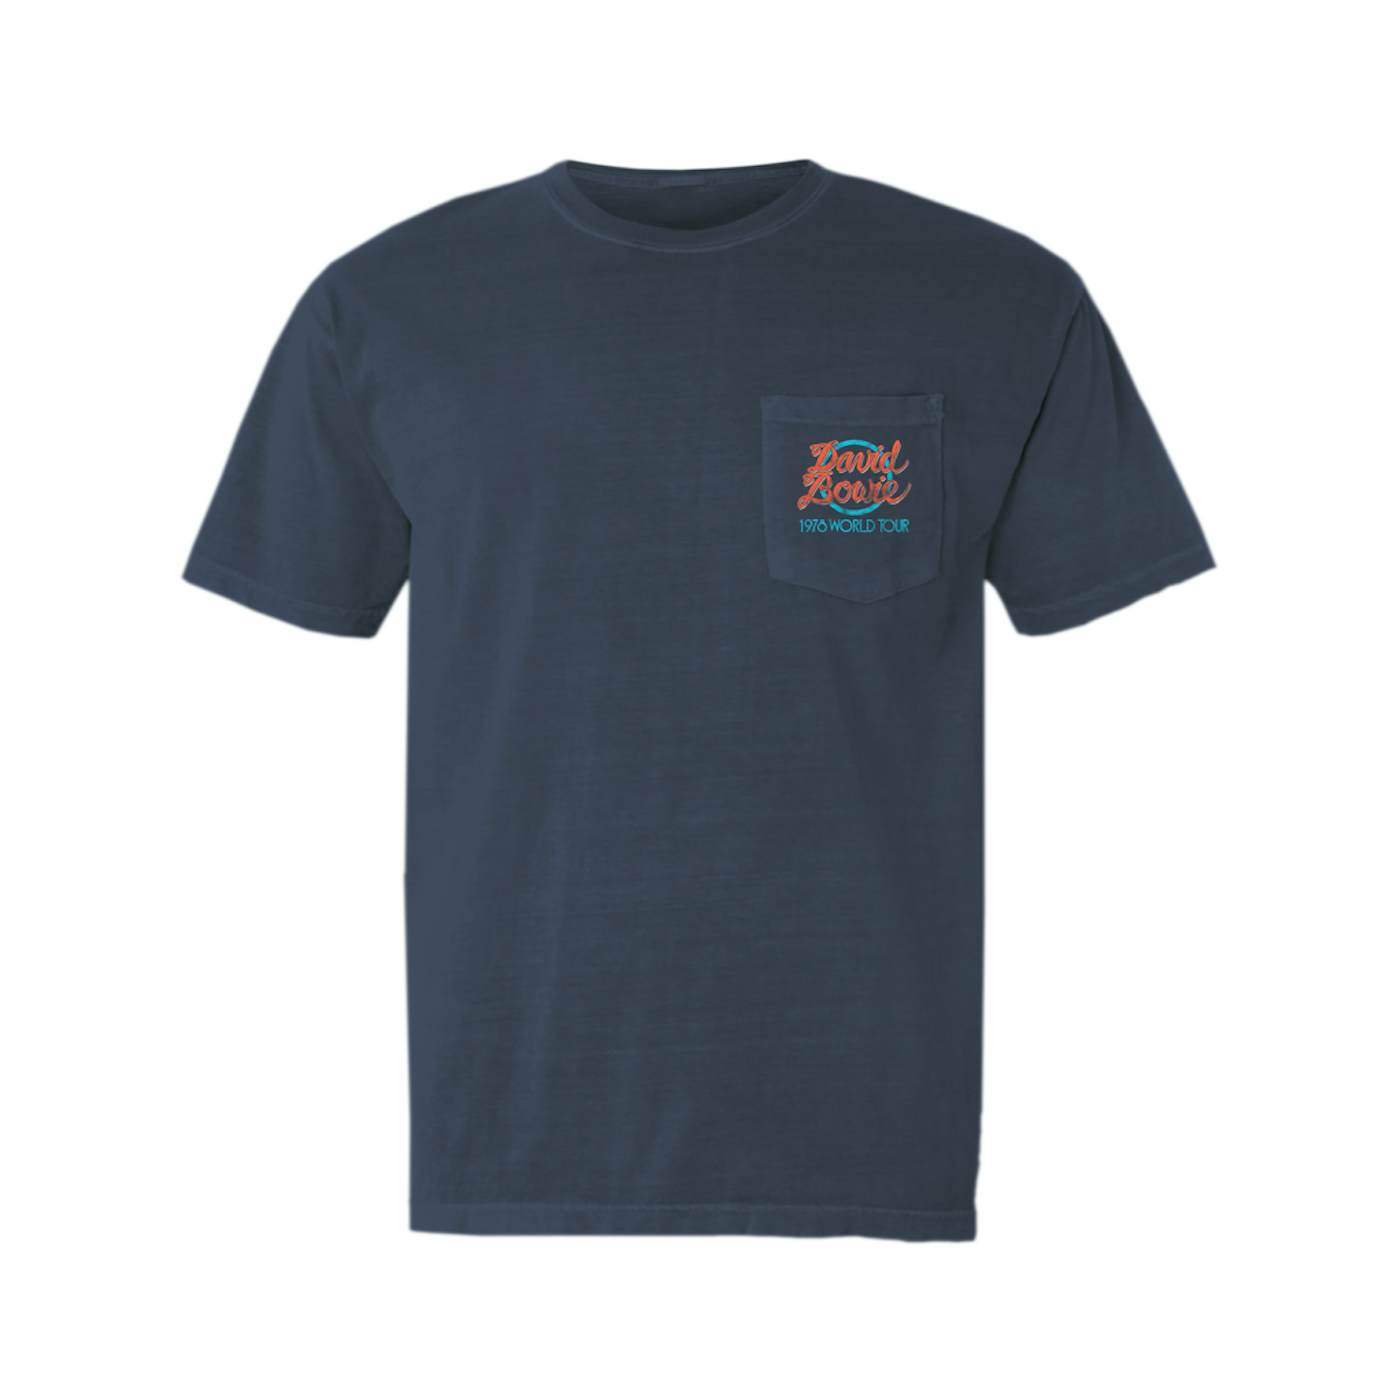 David Bowie T-Shirt | Turquoise 1978 World Tour Distressed (Merchbar Exclusive) David Bowie Pocket T-shirt